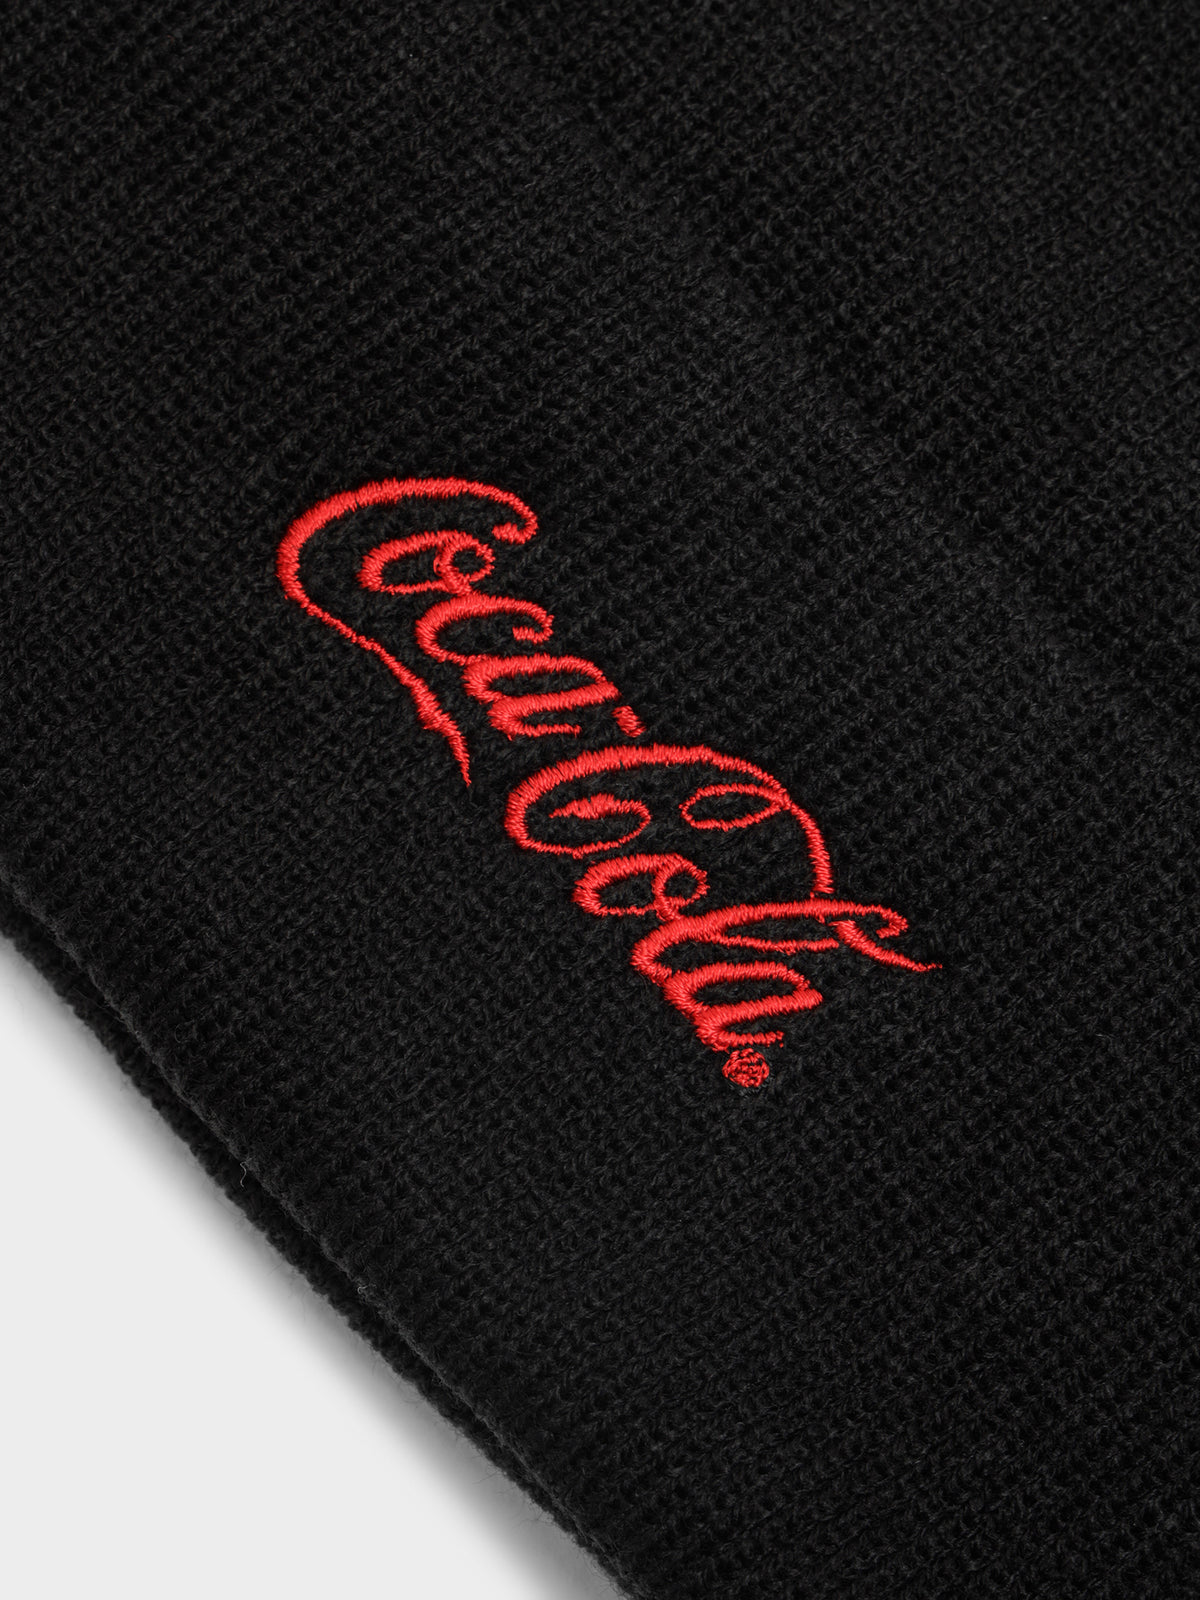 Folder Coca Cola Beanie